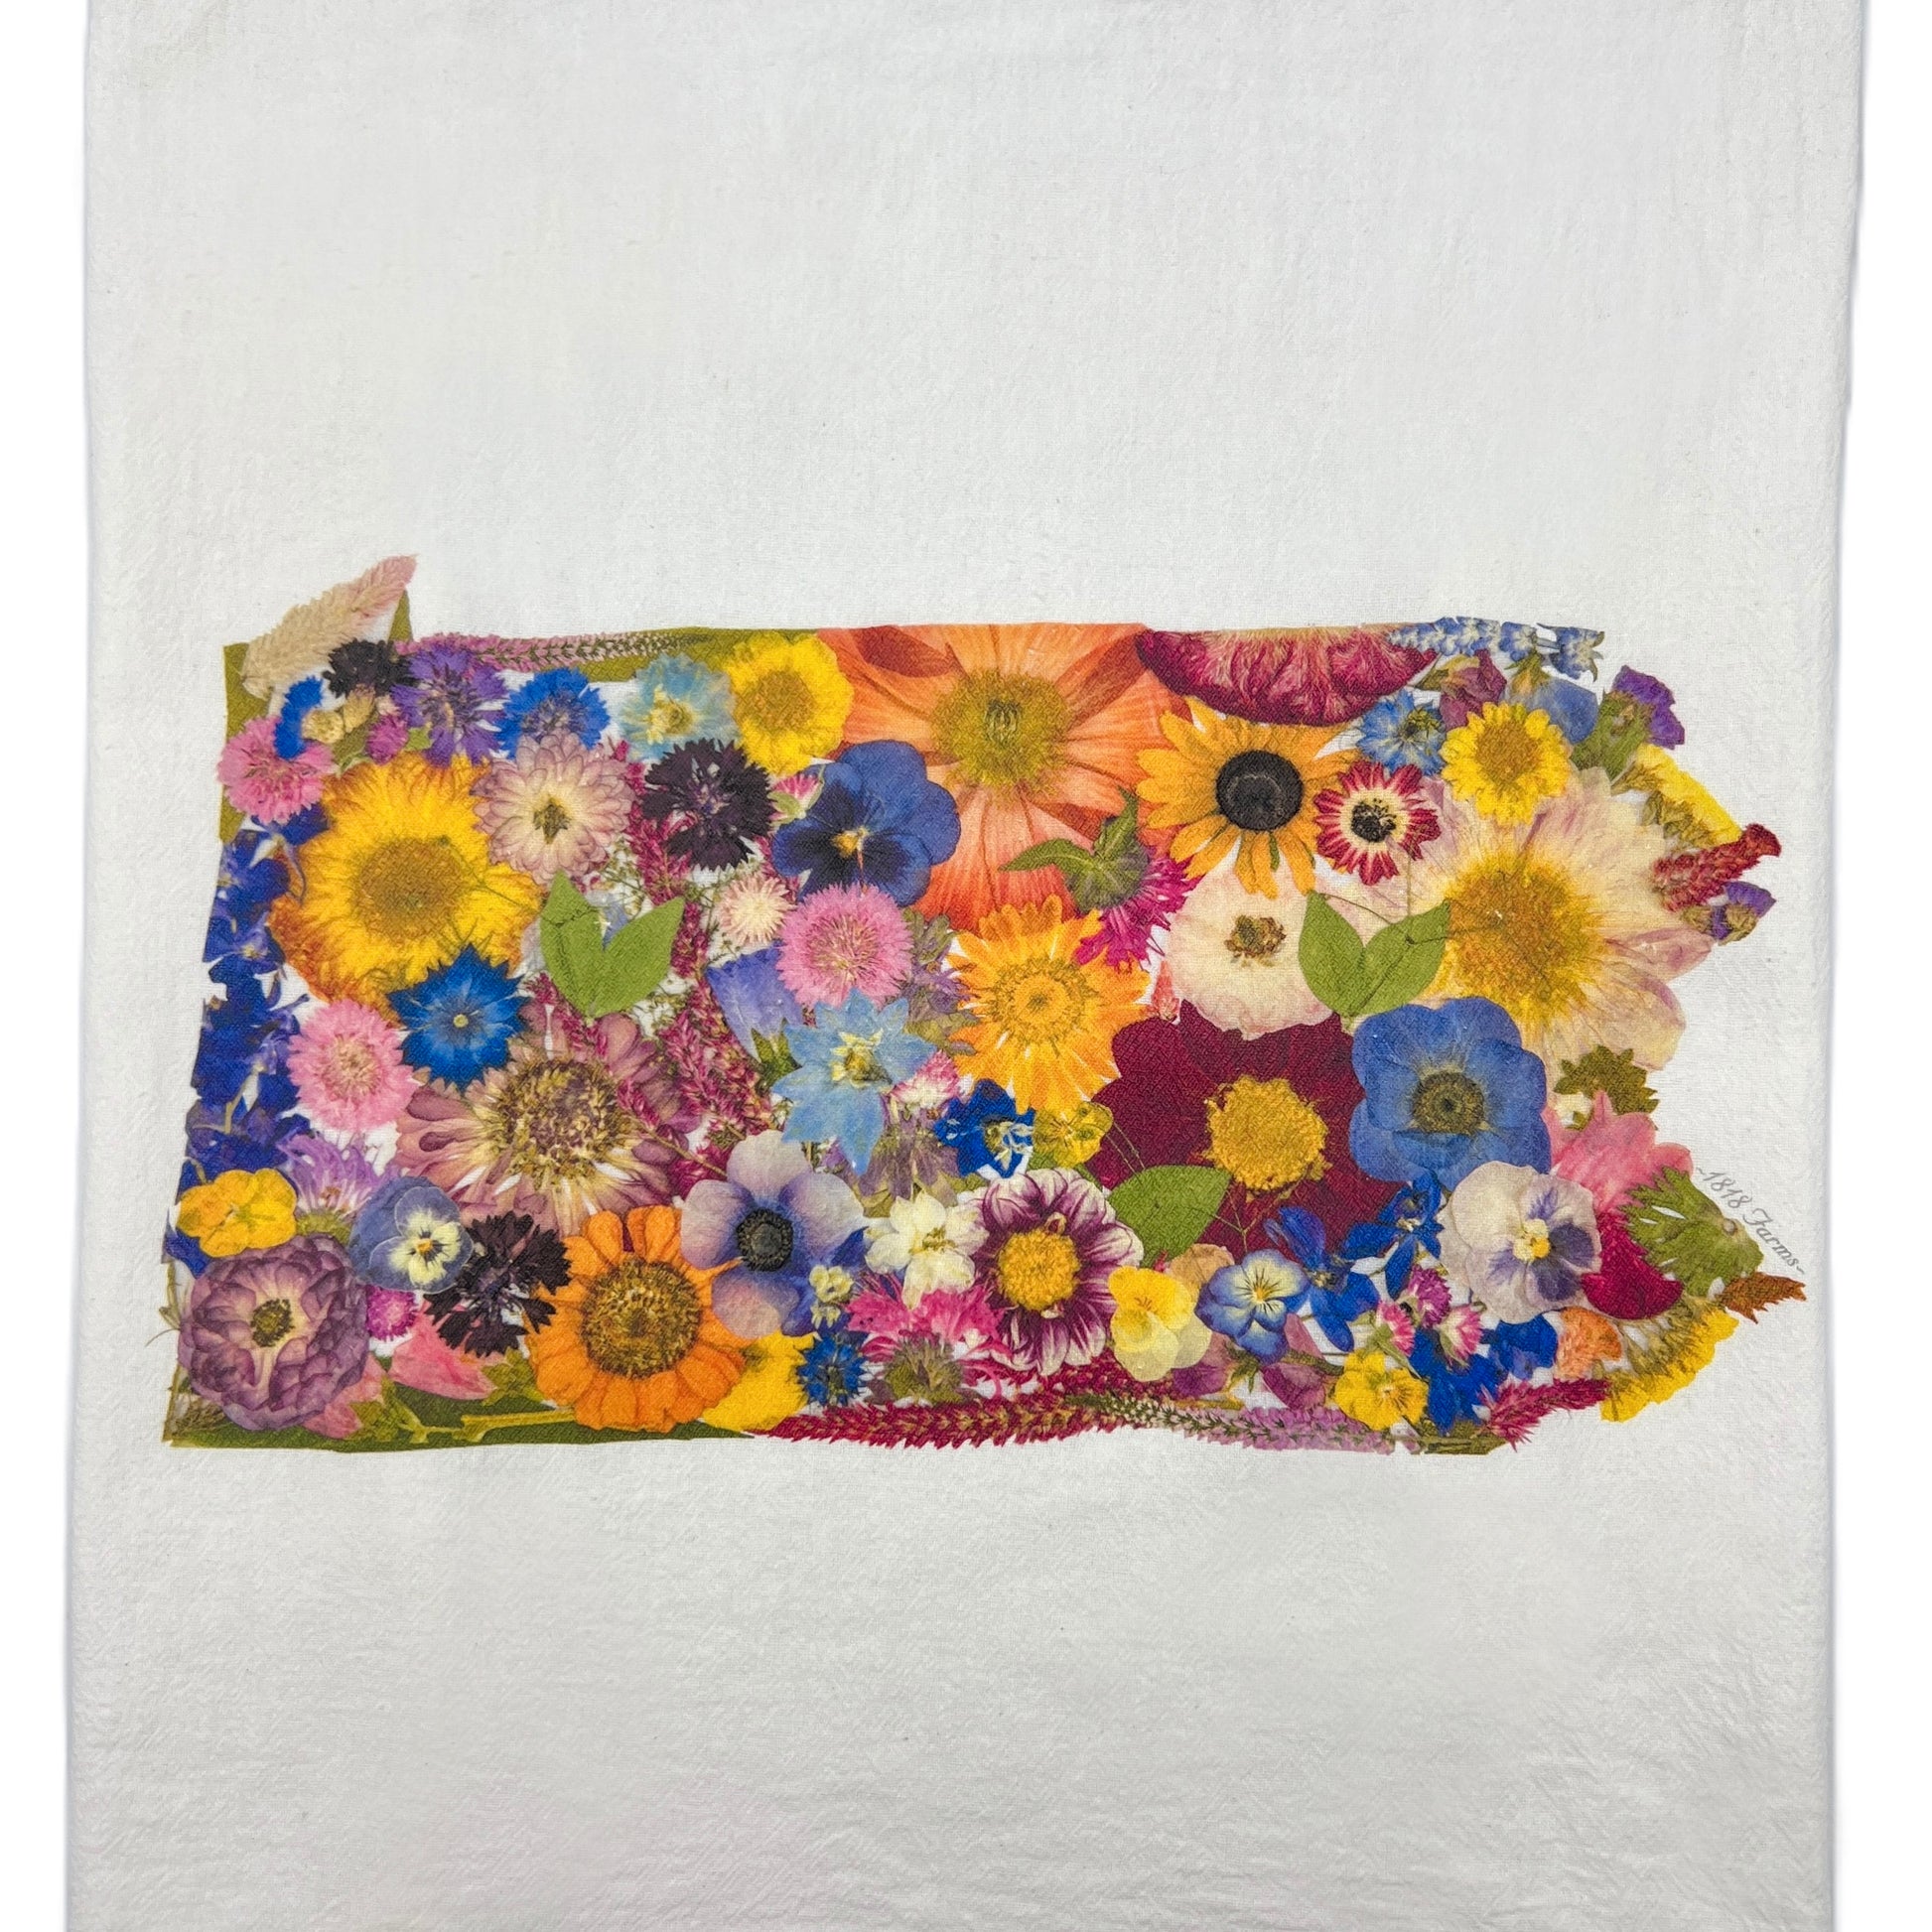 Pennsylvania Themed Flour Sack Towel  - "Where I Bloom" Collection Towel 1818 Farms   